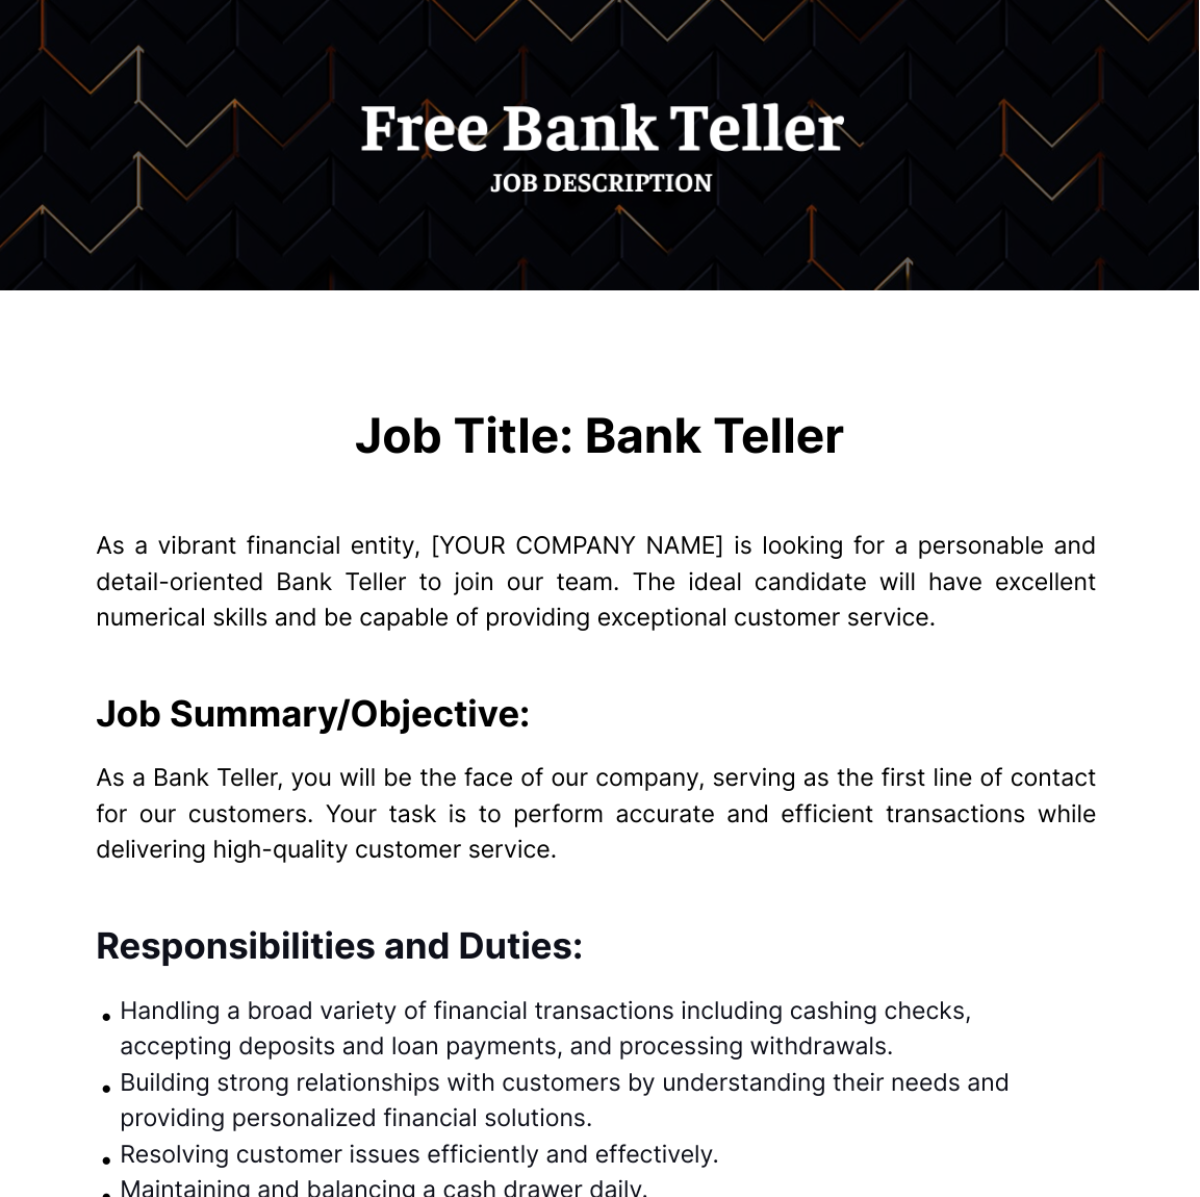 Free Bank Teller Job Description Template